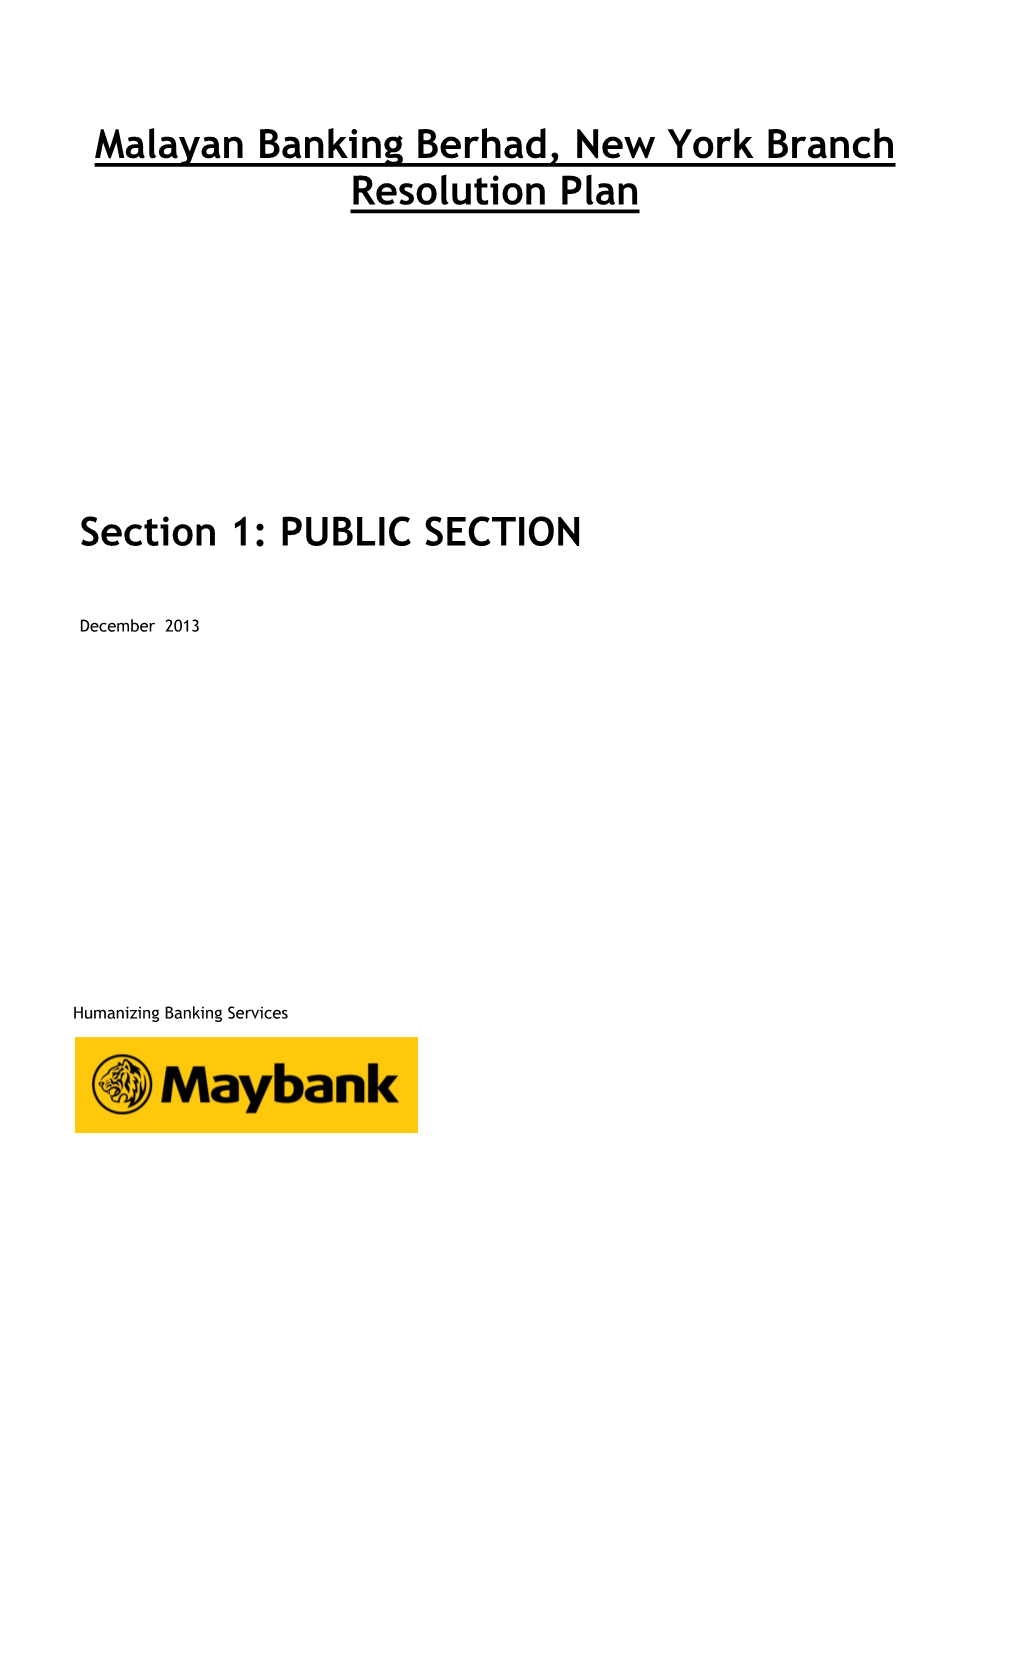 Malayan Banking Berhad, New York Branch Resolution Plan Section 1